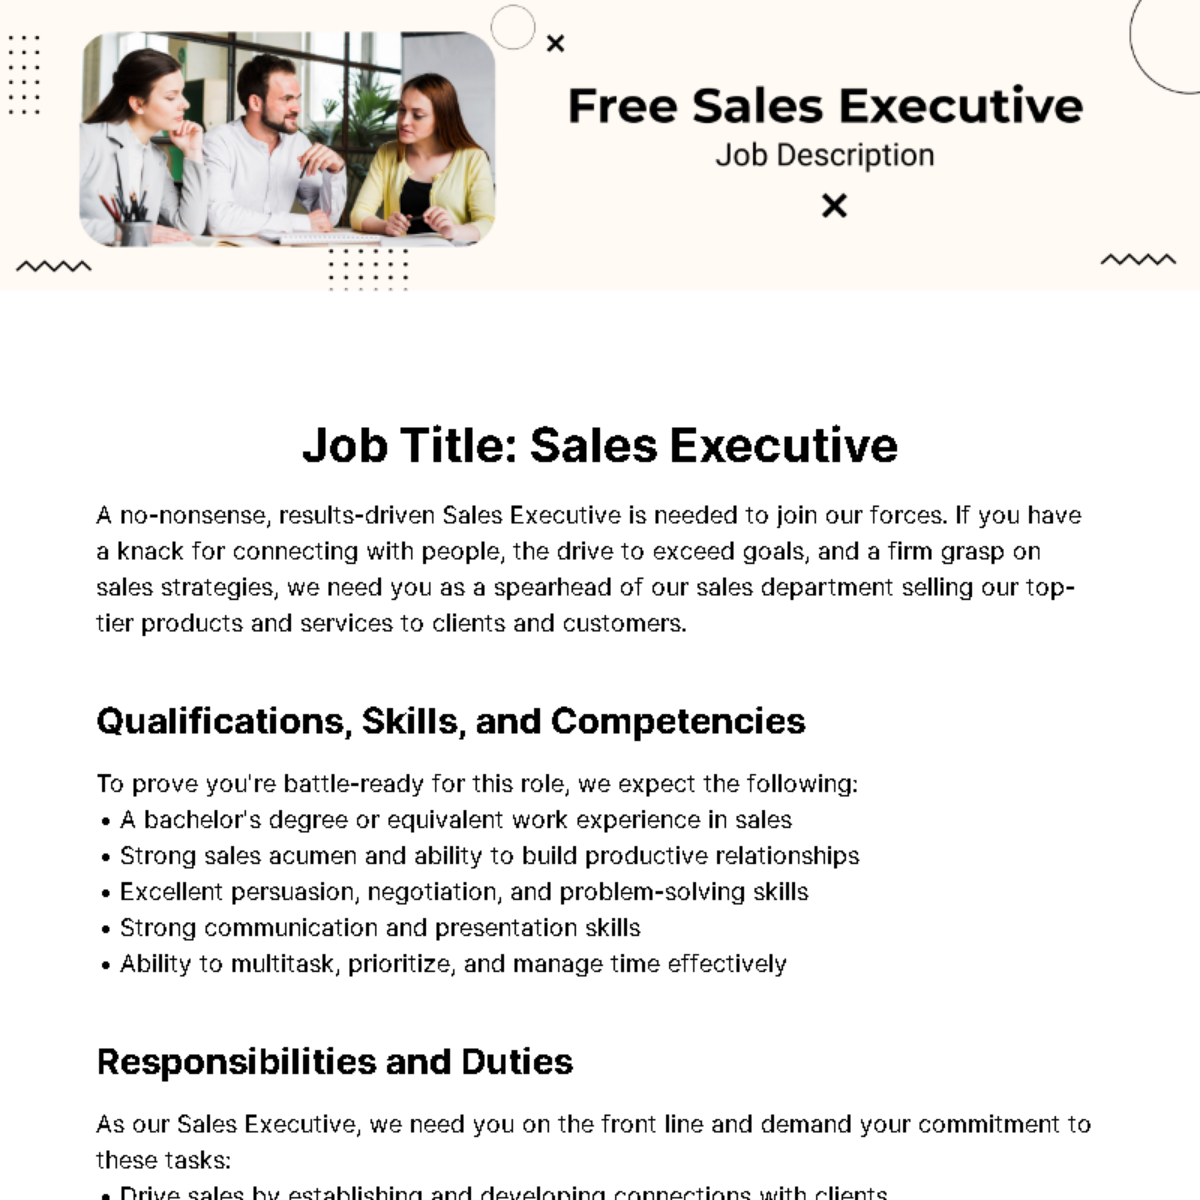 Free Sales Executive Job Description Template